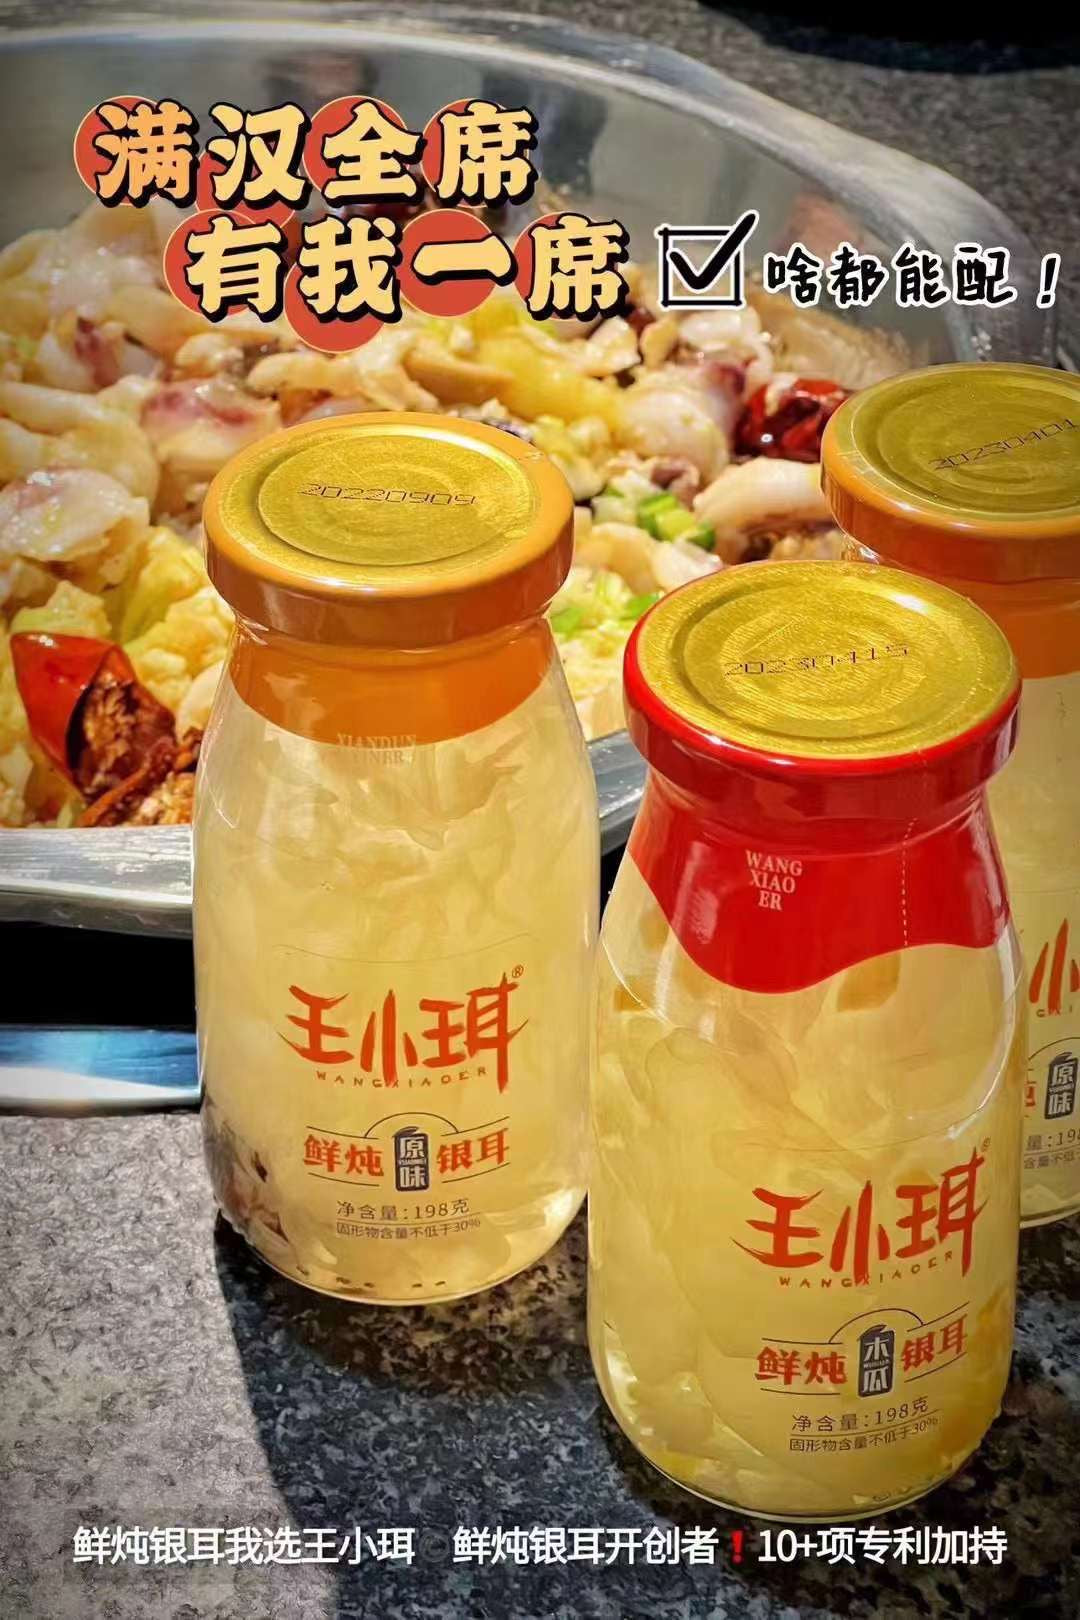 Wang Xiaoer tremella soup, 198g*6 bottles